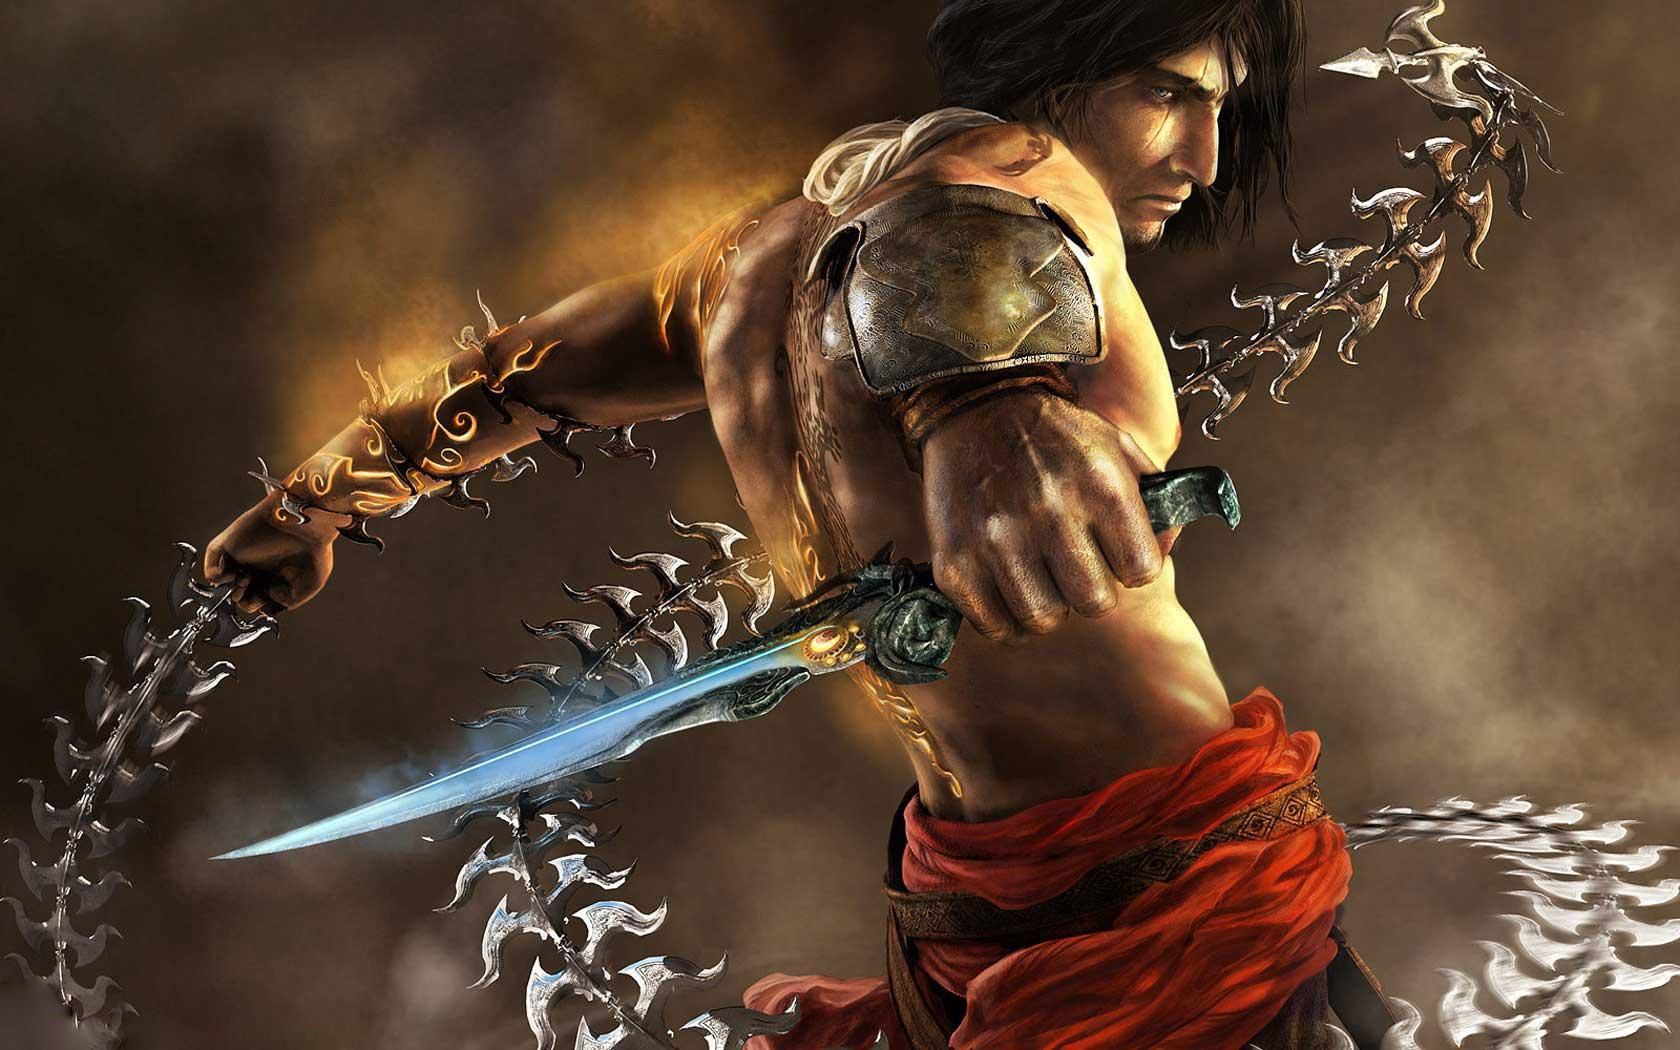 General 1680x1050 warrior video game warriors Video Game Heroes fantasy men video game art Prince of Persia: The Two Thrones video game men fantasy art Ubisoft